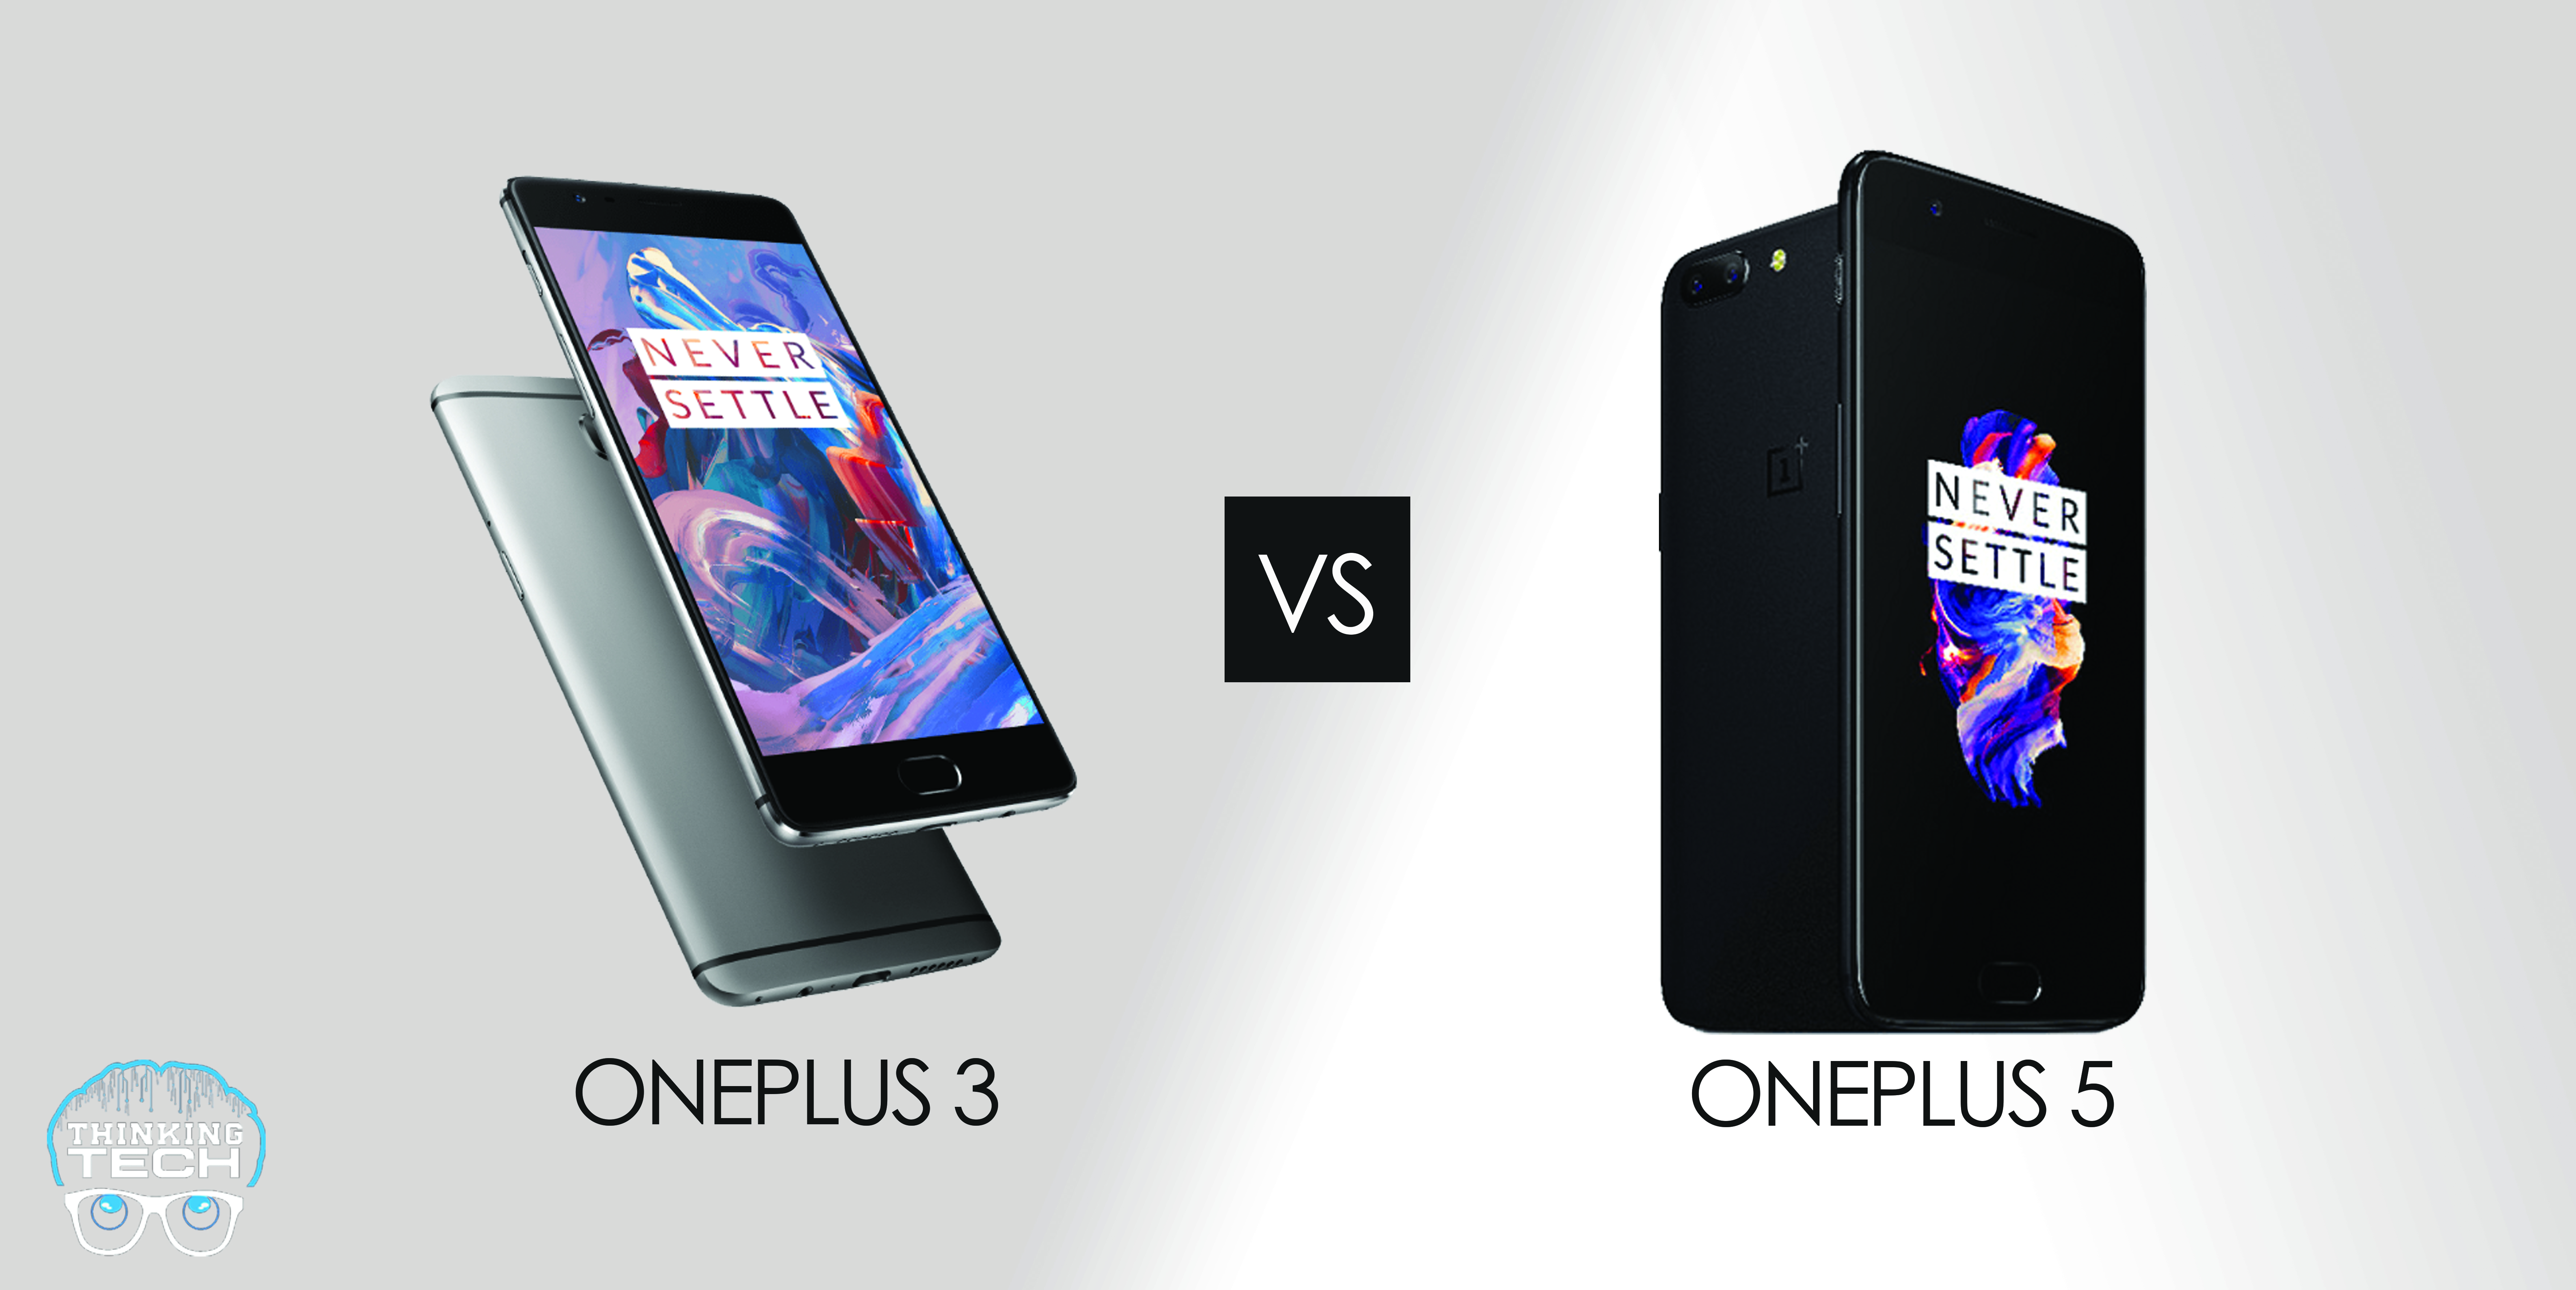 Oneplus 5 vs Oneplus 3